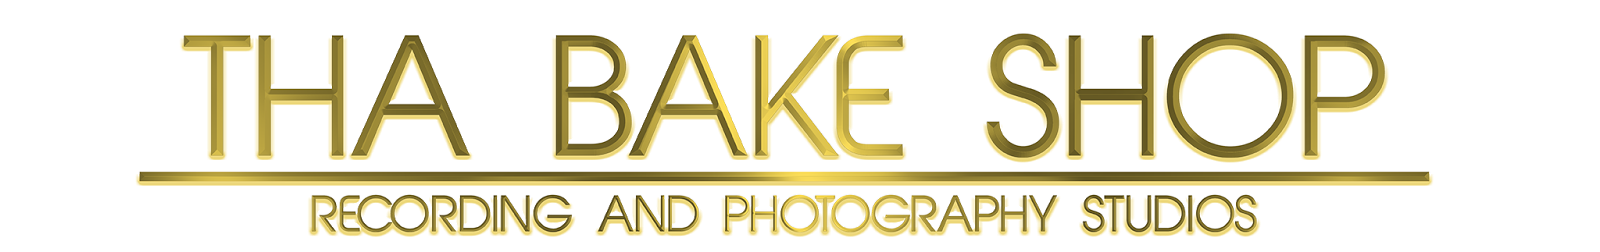 Tha Bake Shop Studio Logo